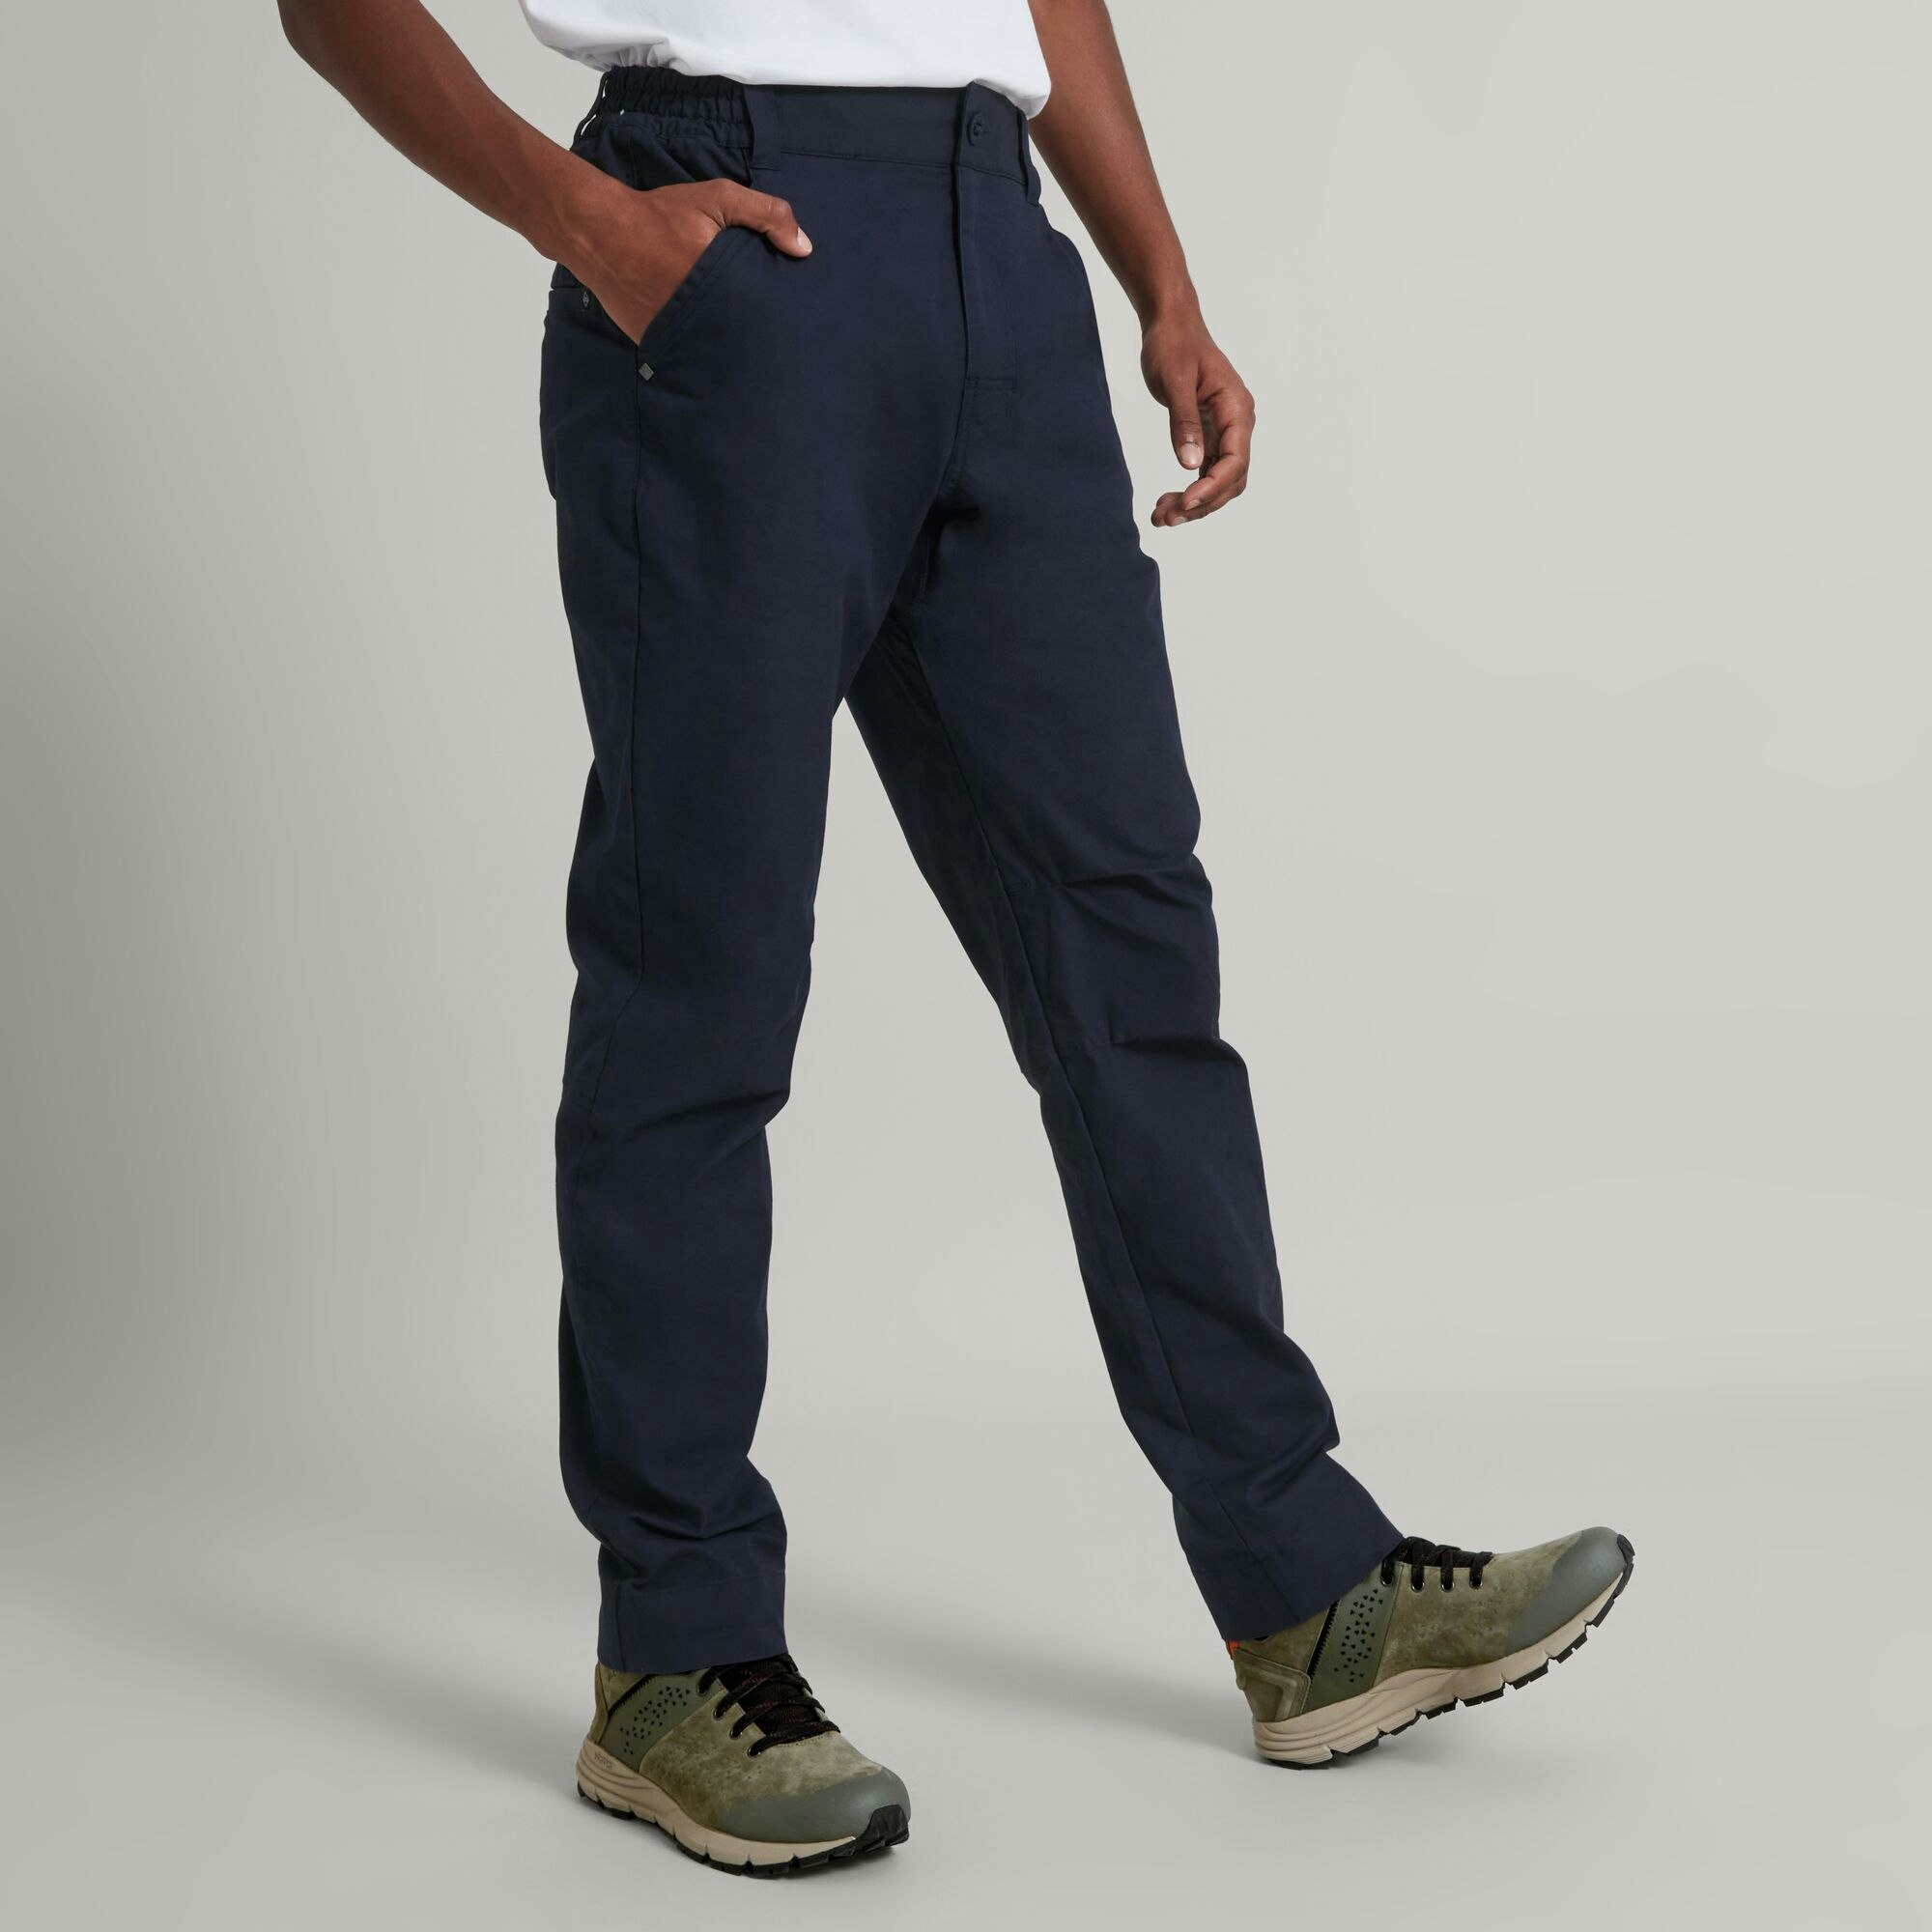 Kathmandu Flight Pants V2 - Walking trousers Men's | Buy online |  Bergfreunde.eu